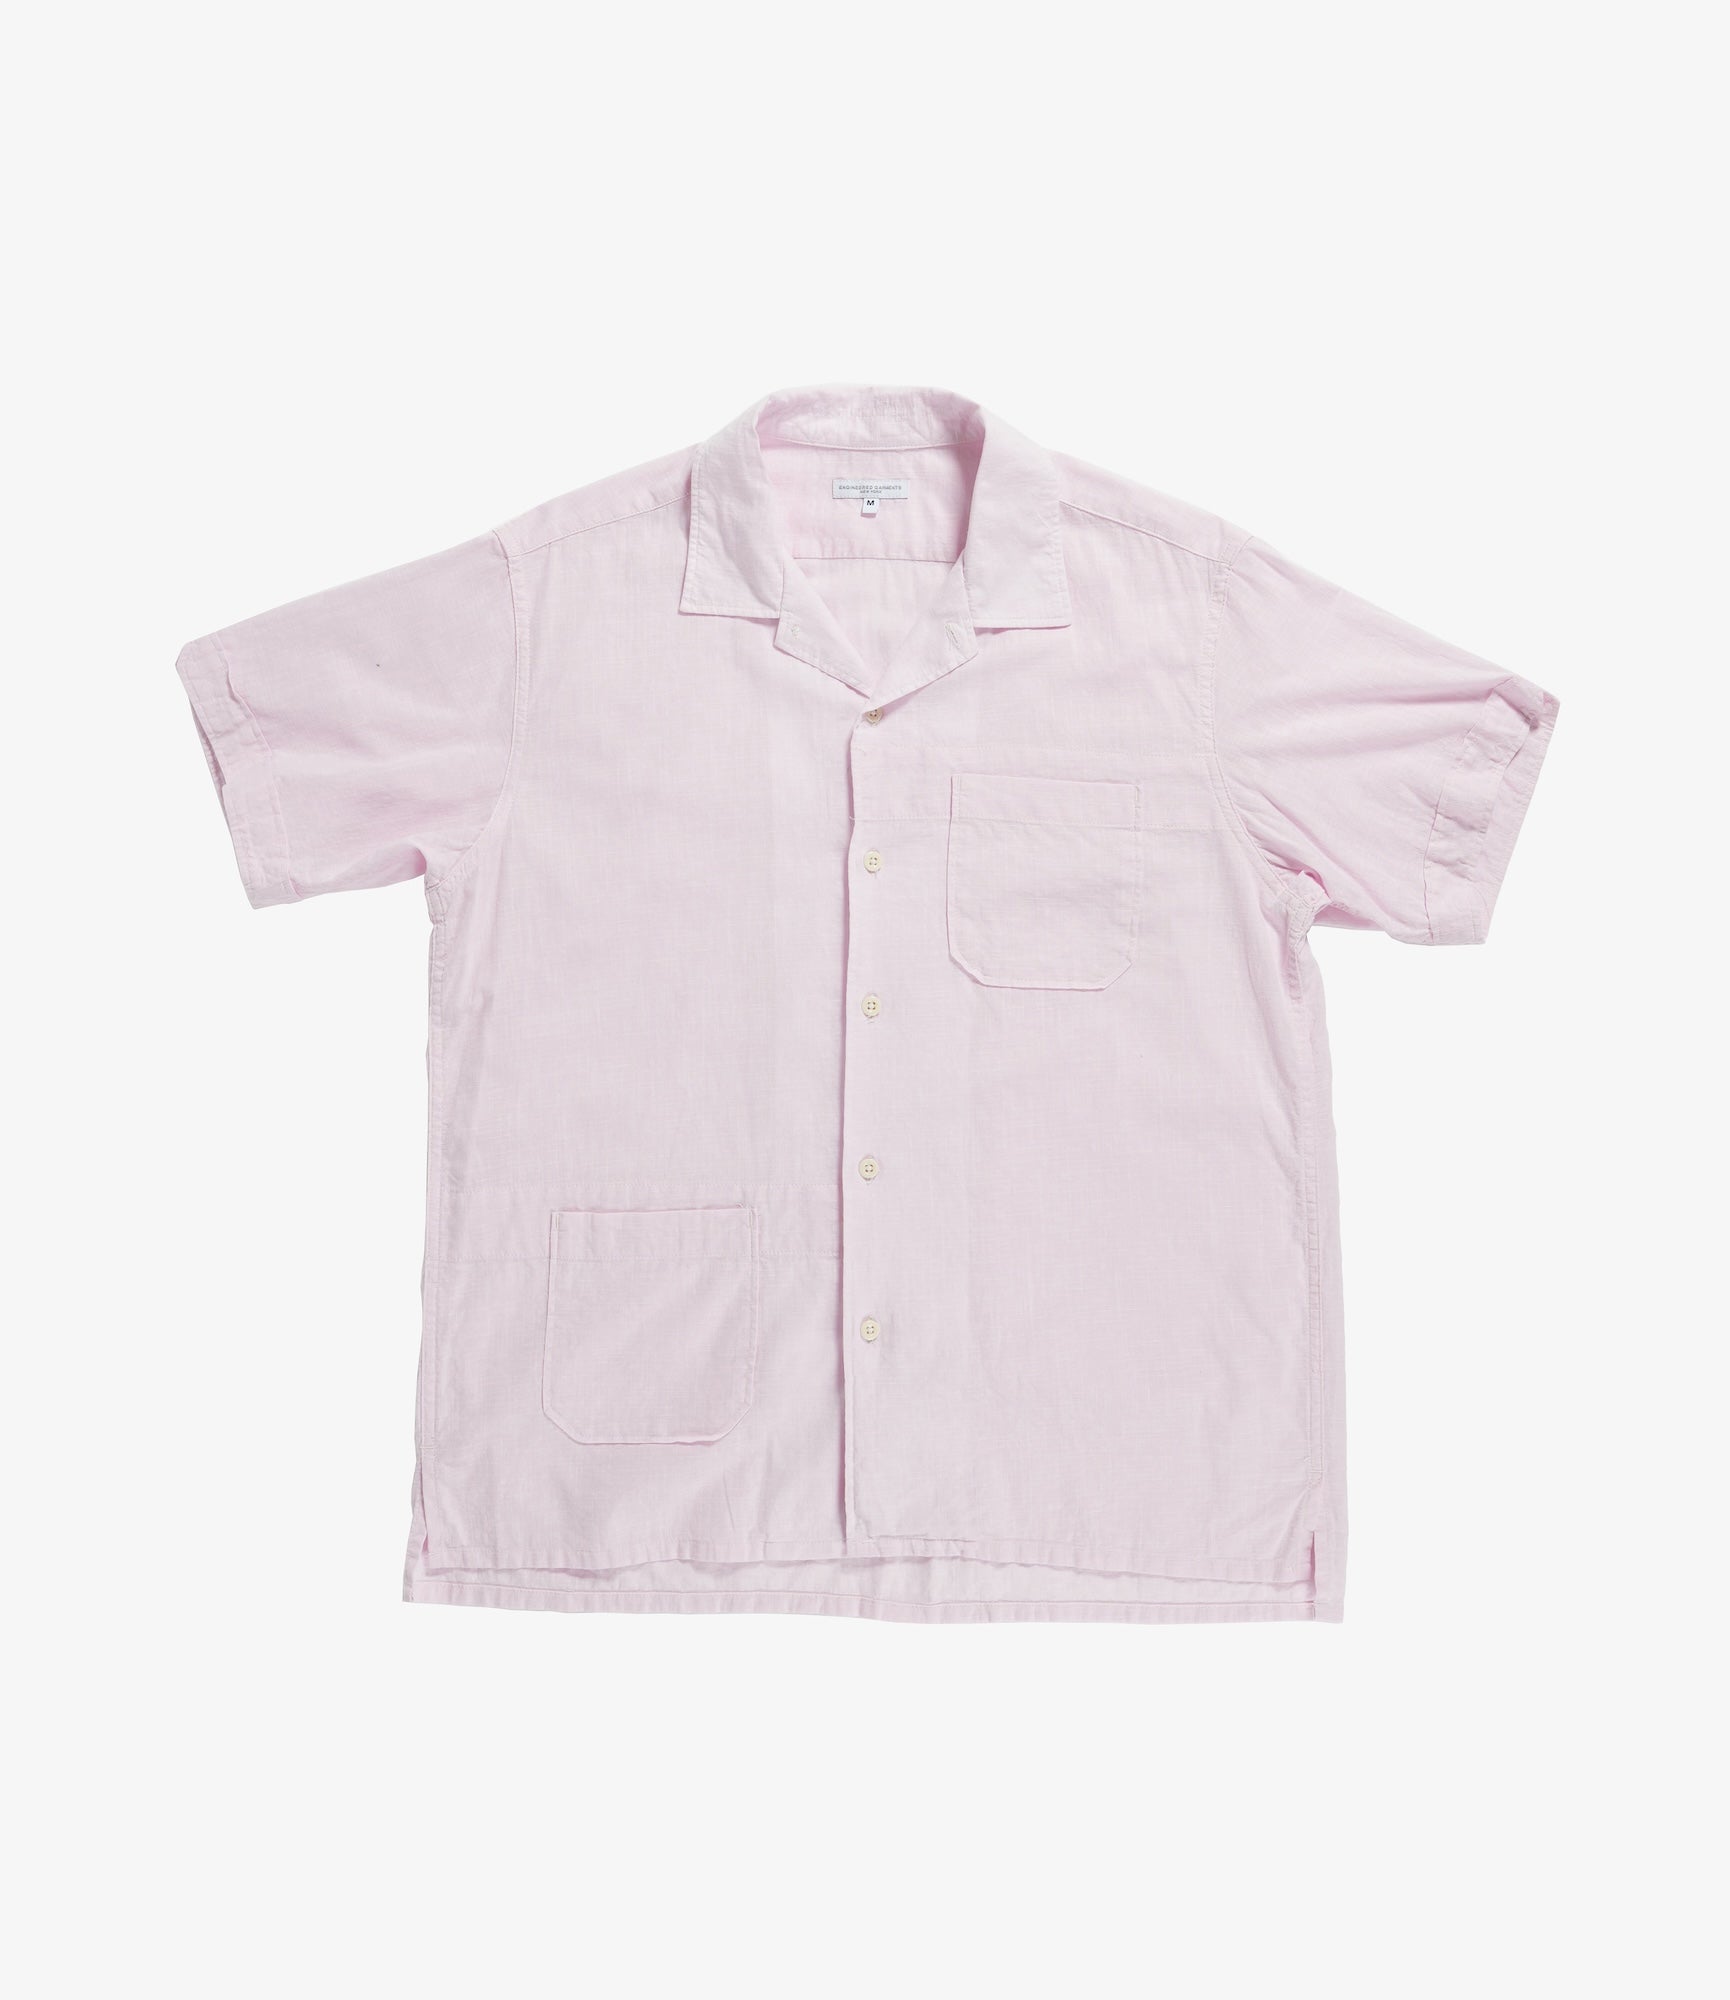 Engineered Garments Camp Shirt - Pink Cotton Handkerchief